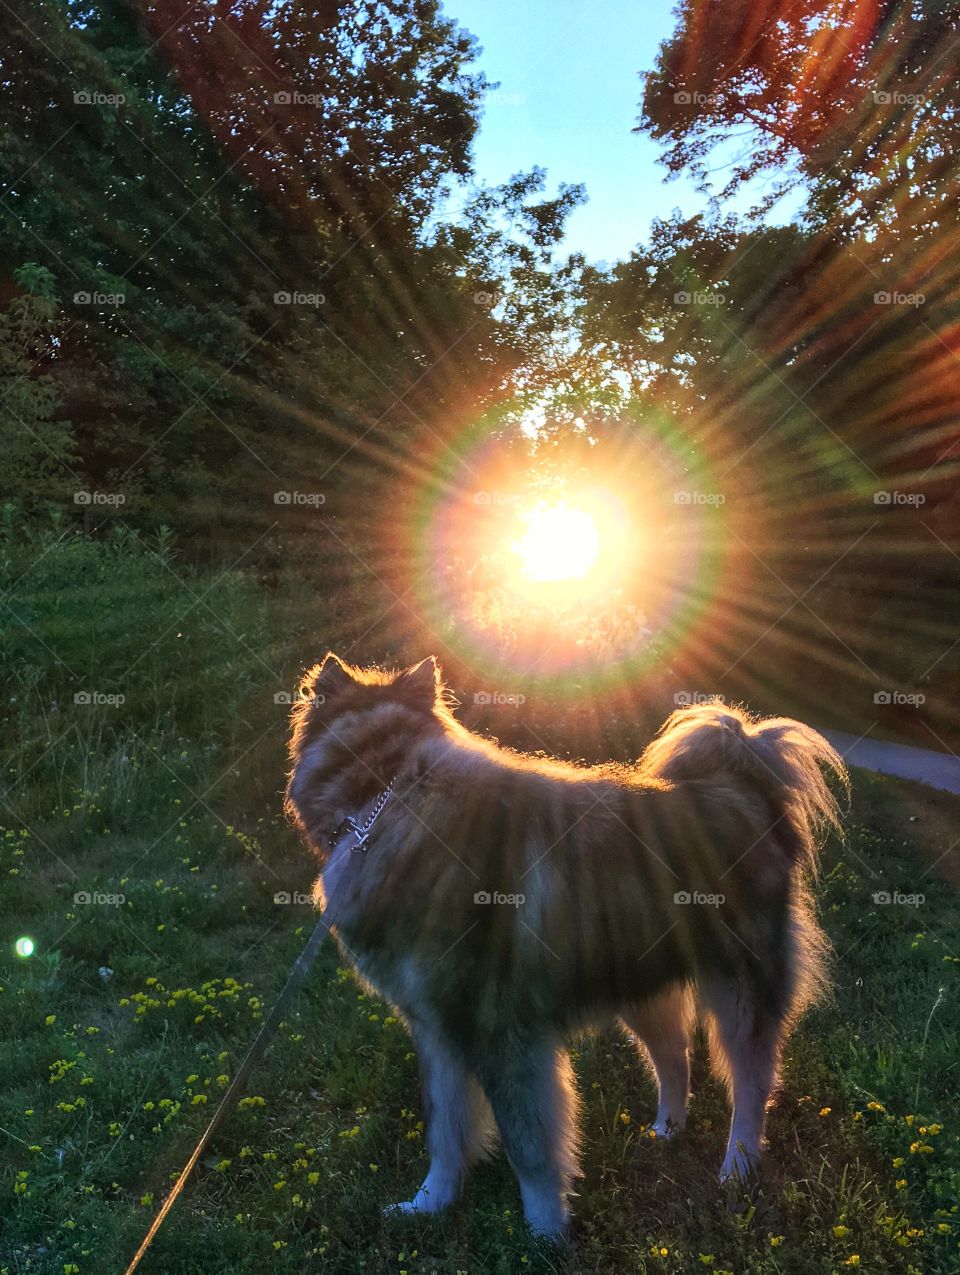 Dog look way towards the sunlight